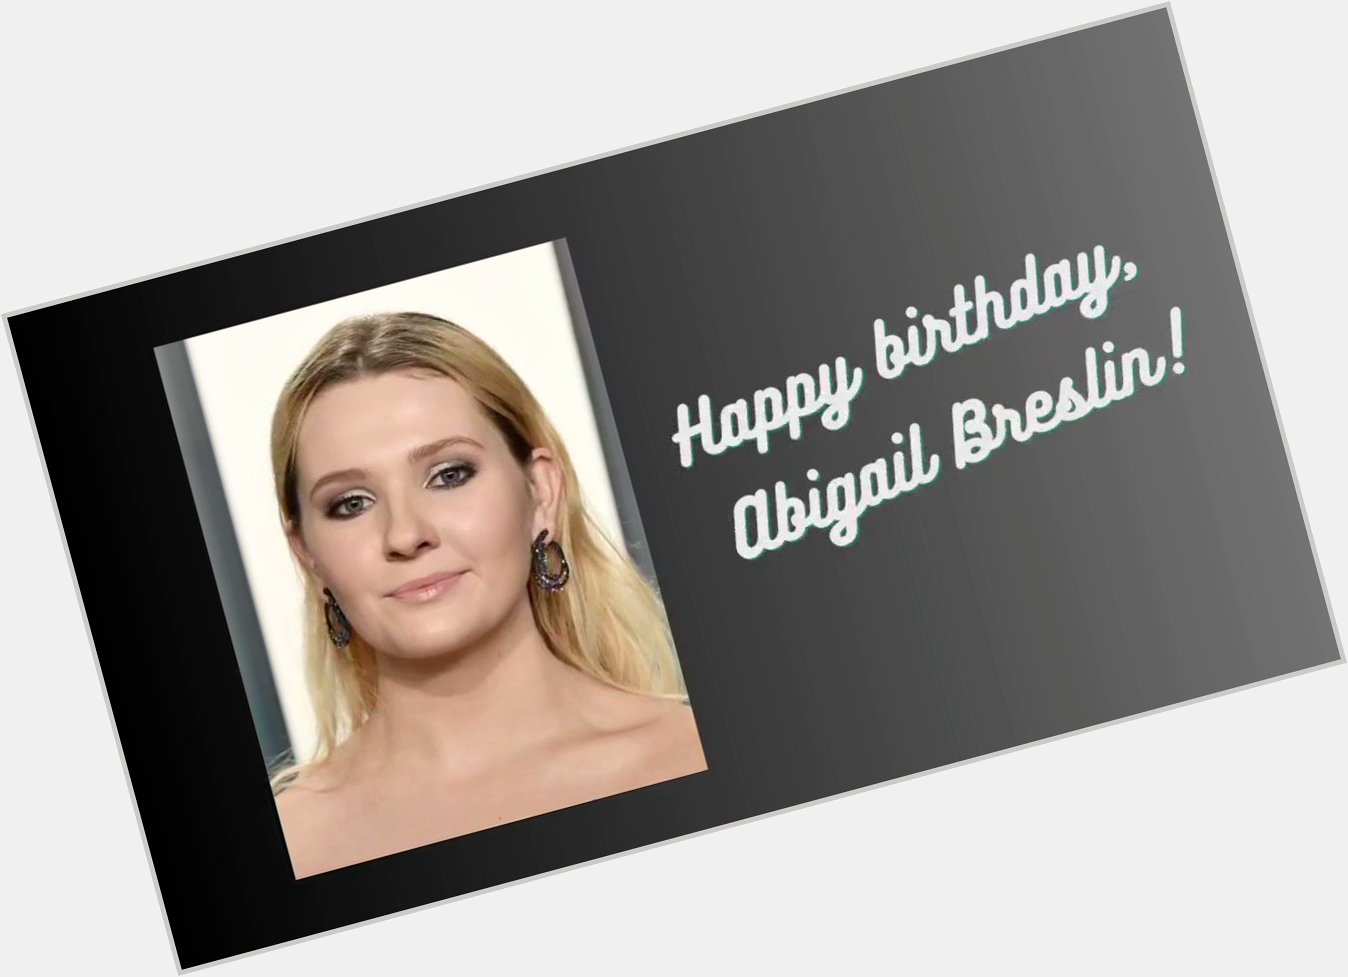 Happy birthday, Abigail Breslin!  